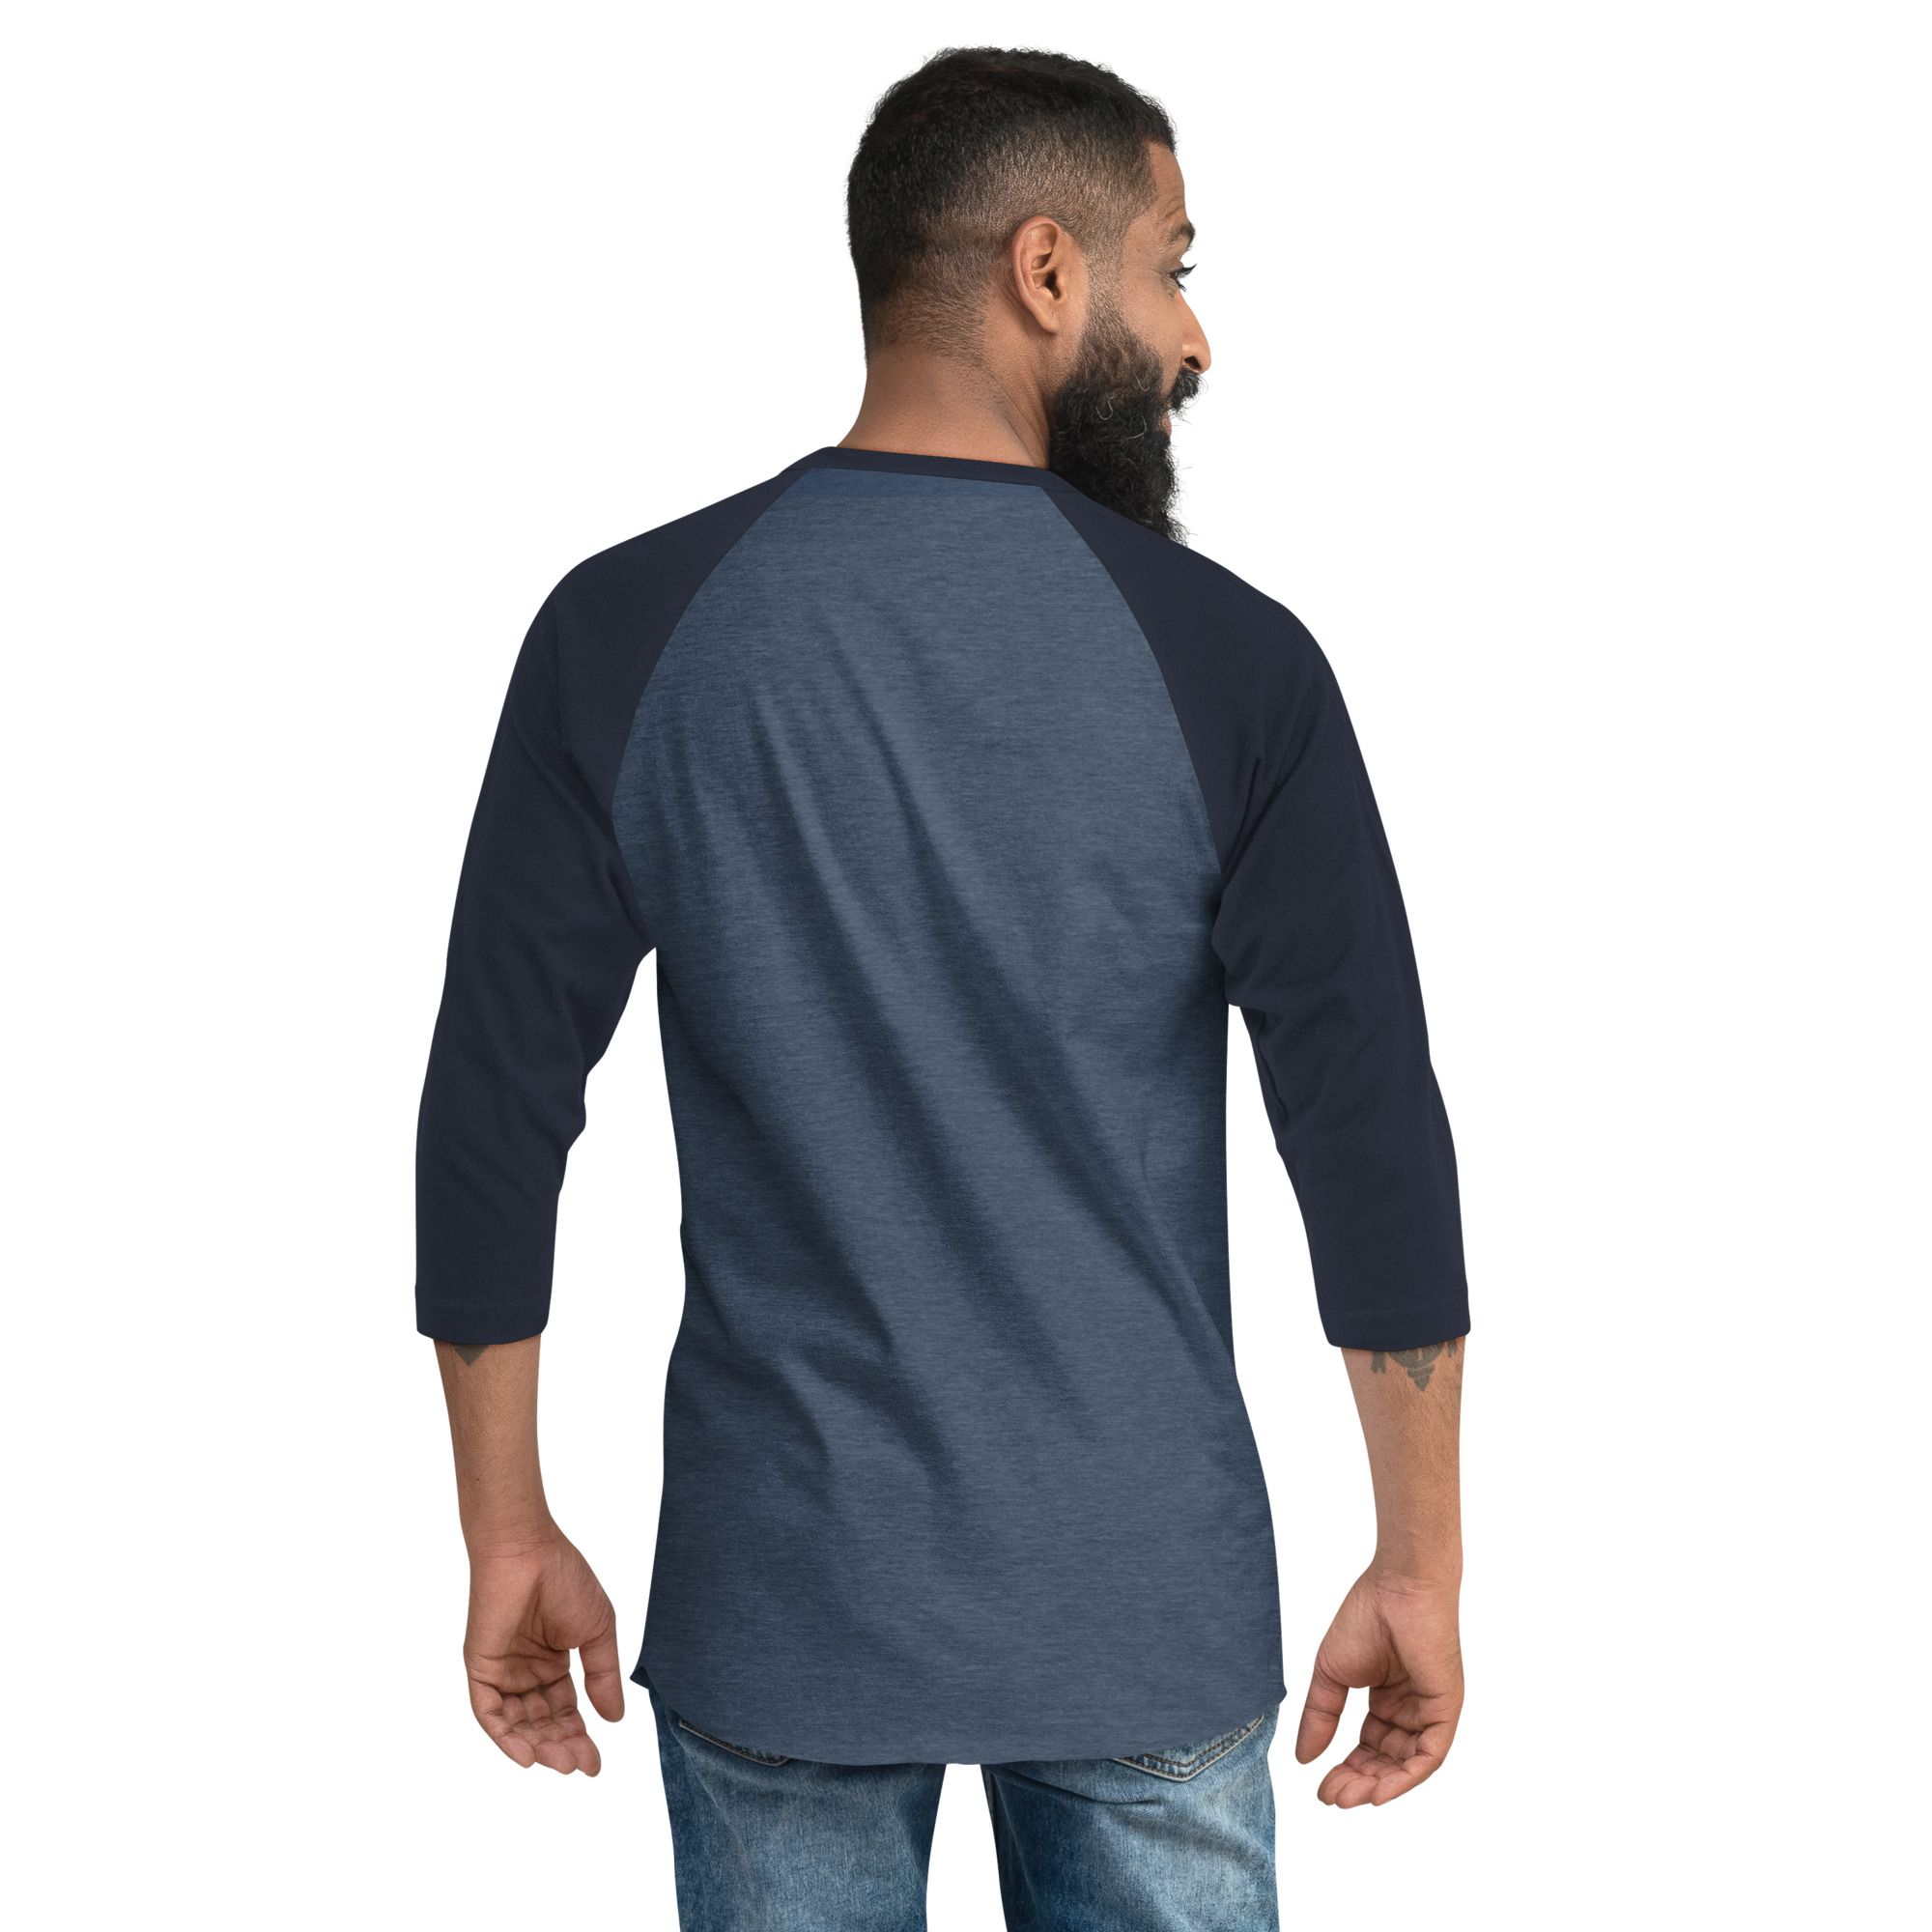 unisex-34-sleeve-raglan-shirt-heather-denim-navy-back-6318ba98ed299.jpg